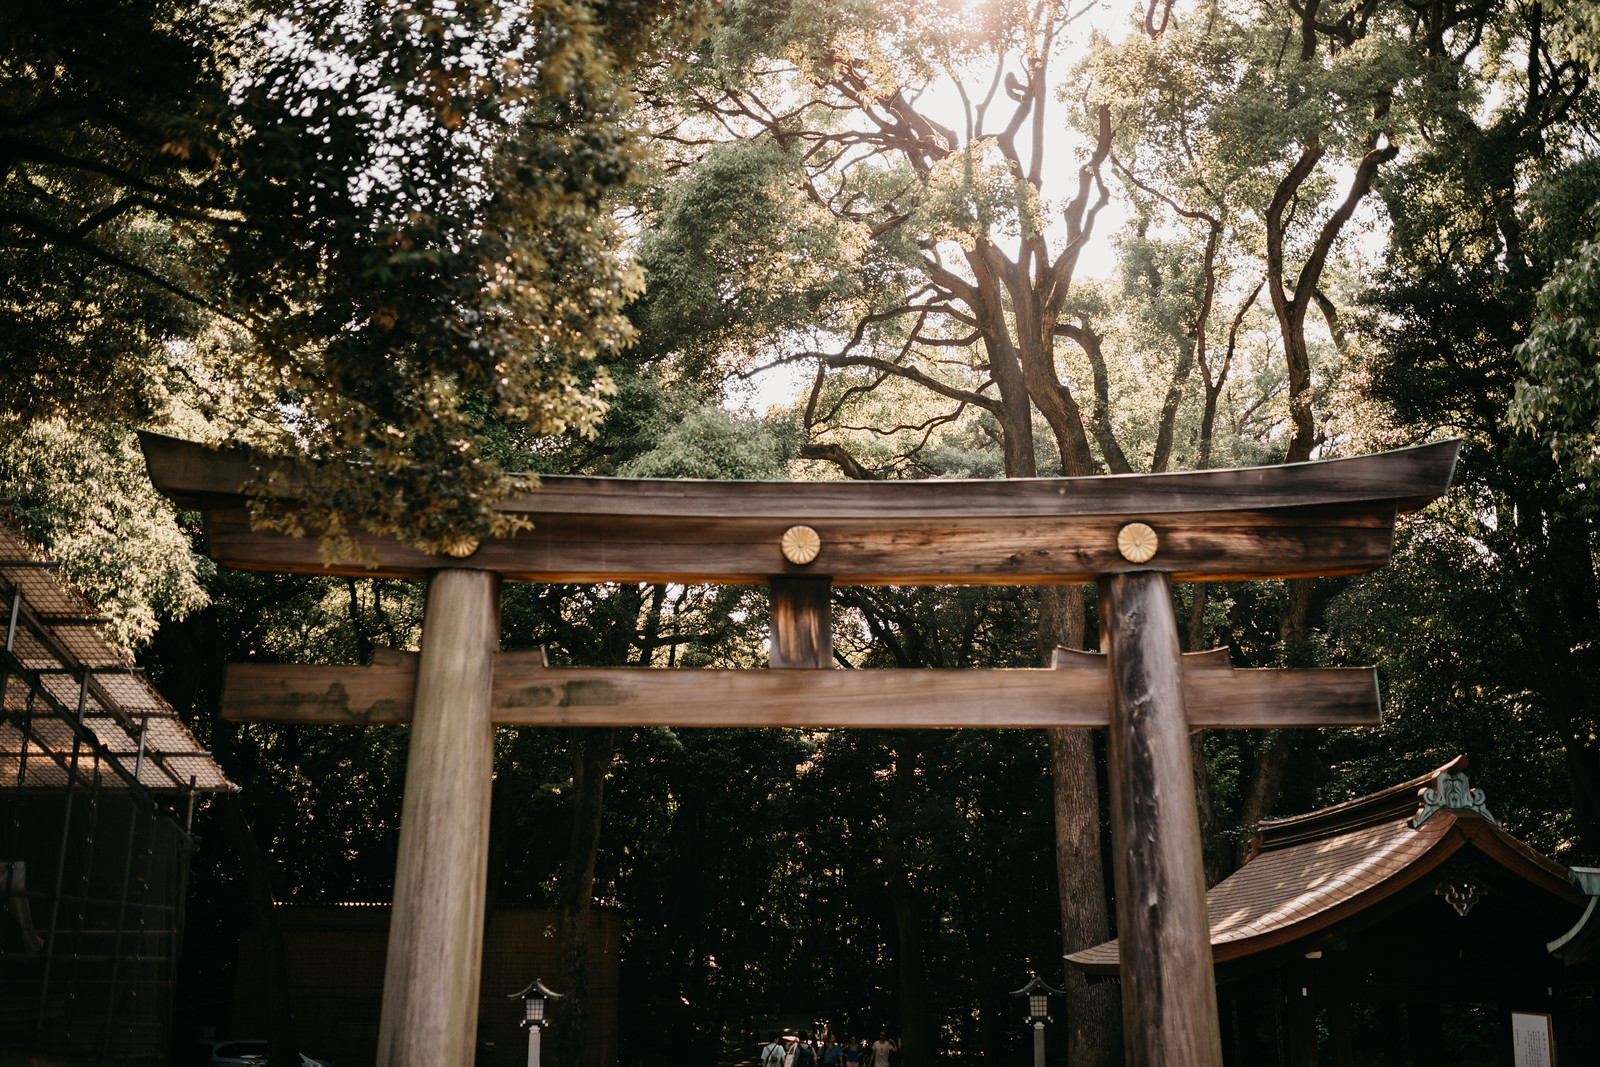 Entrance of Meiji Jingu Shrine in Yoyogi Park Tokyo Japan surrounded by forest